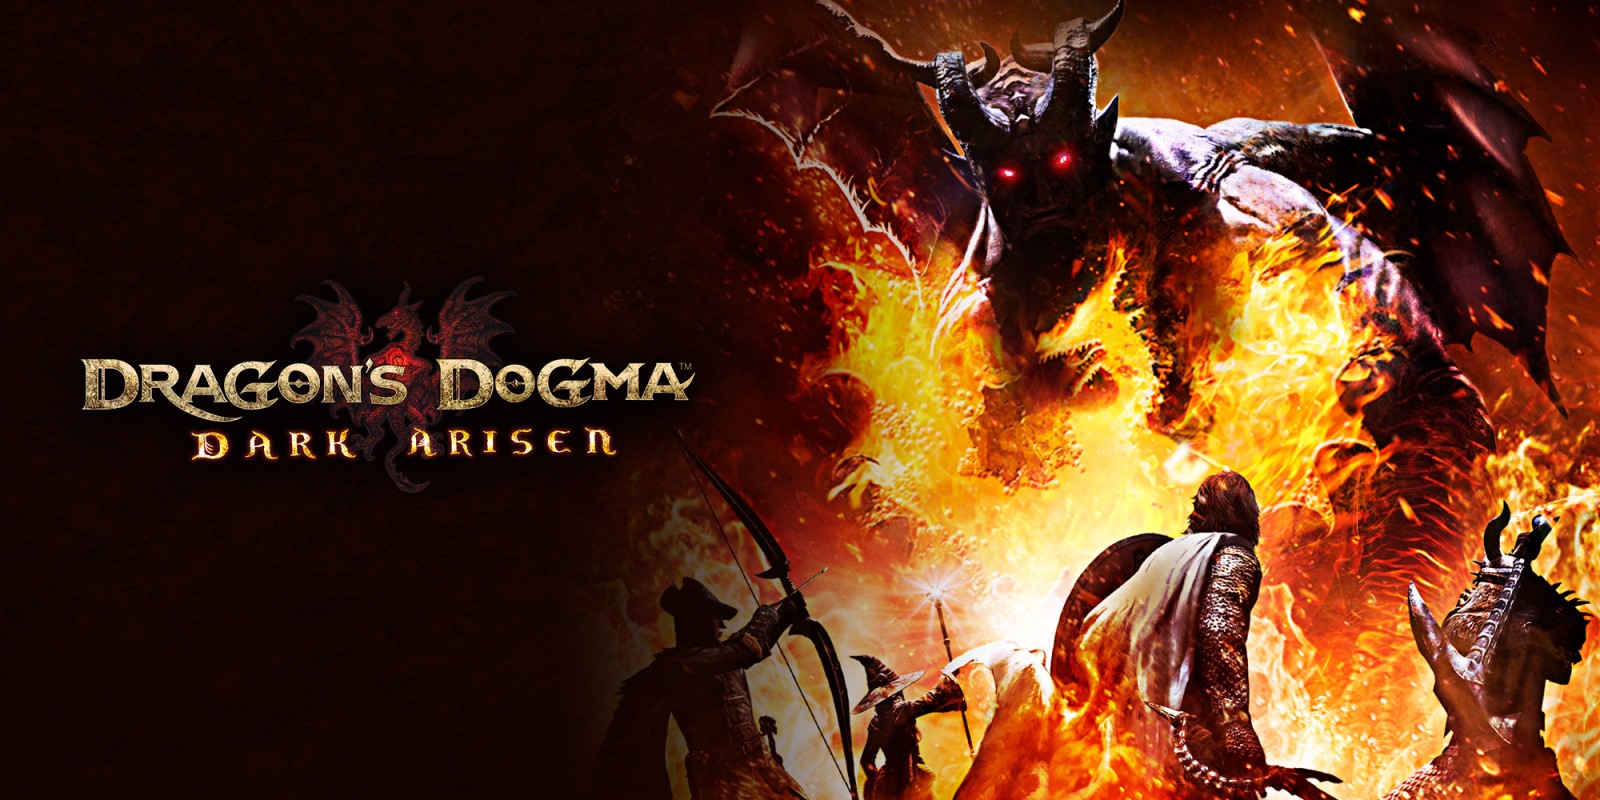 Dragon's Dogma Dark Arisen on Sale on Nintendo eShop